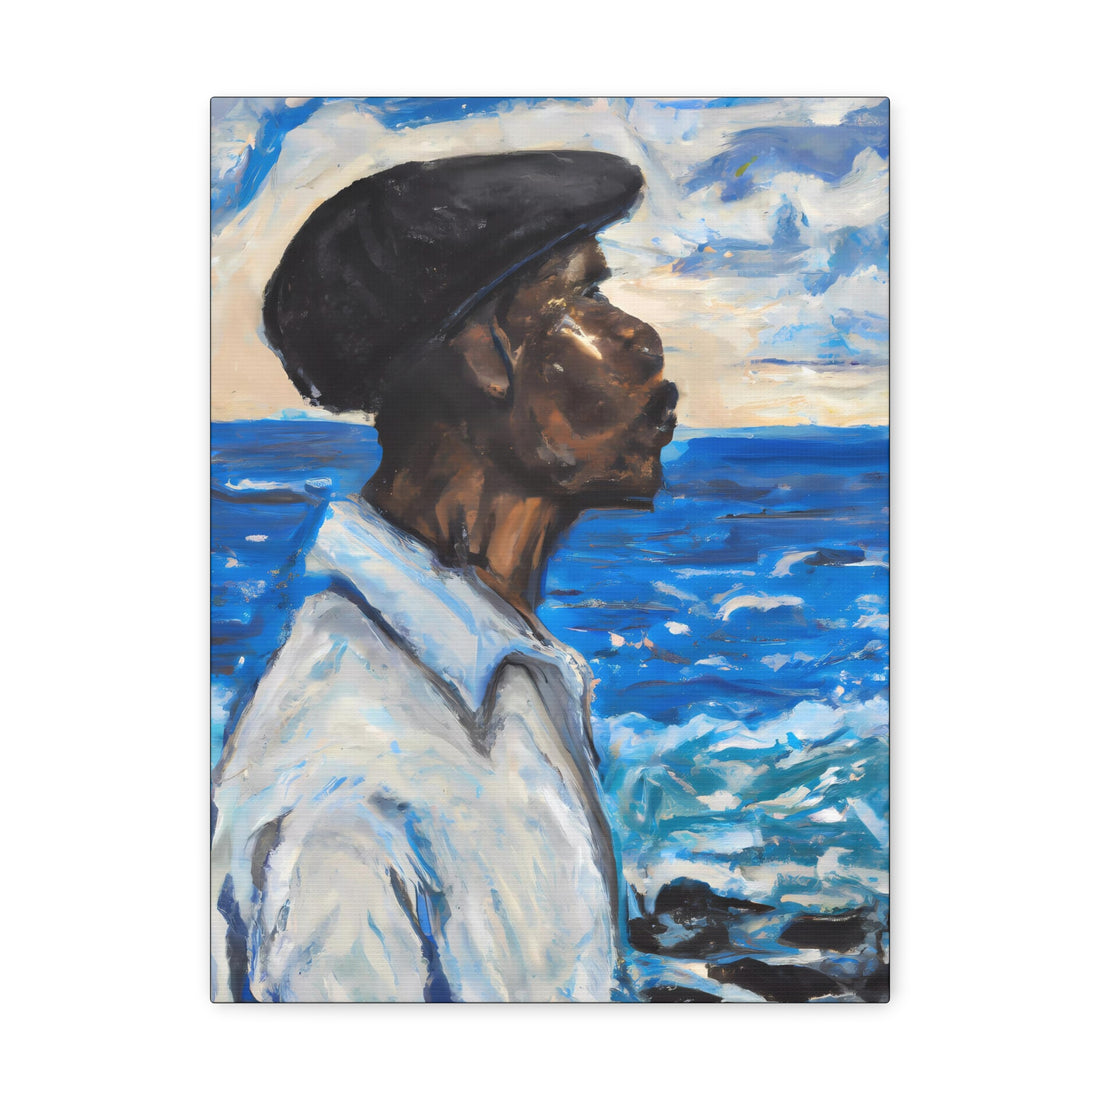 Man Sea Gazing, Black Men Series CANVAS Wall Art